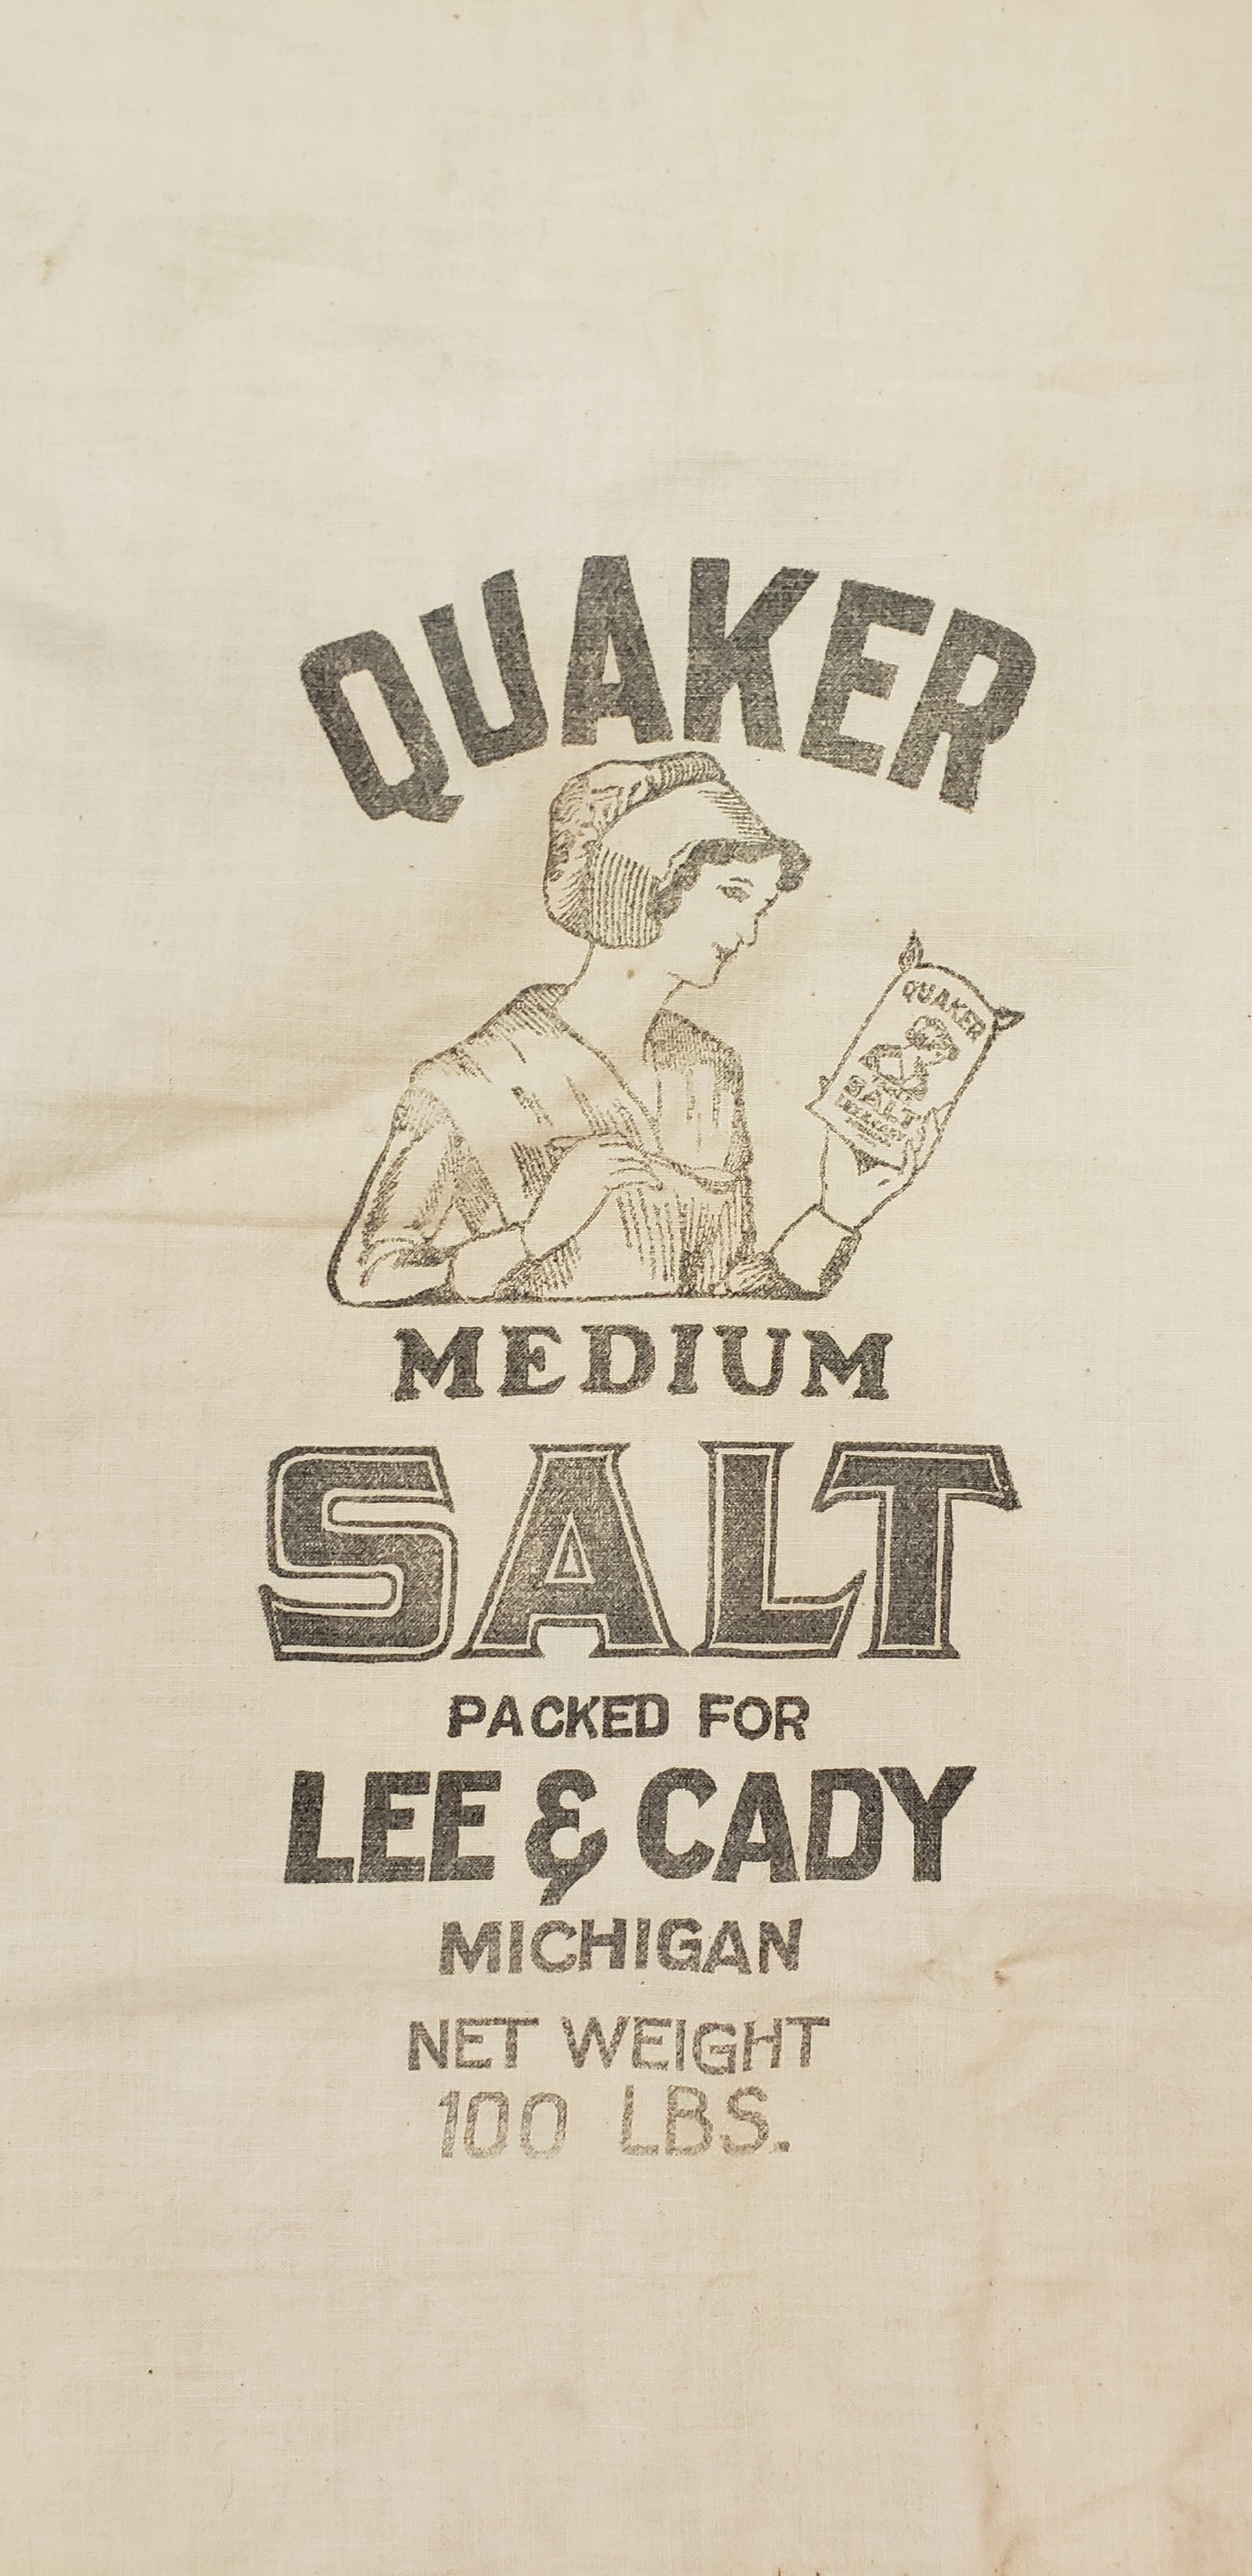 Fabric Quaker Salt Sack